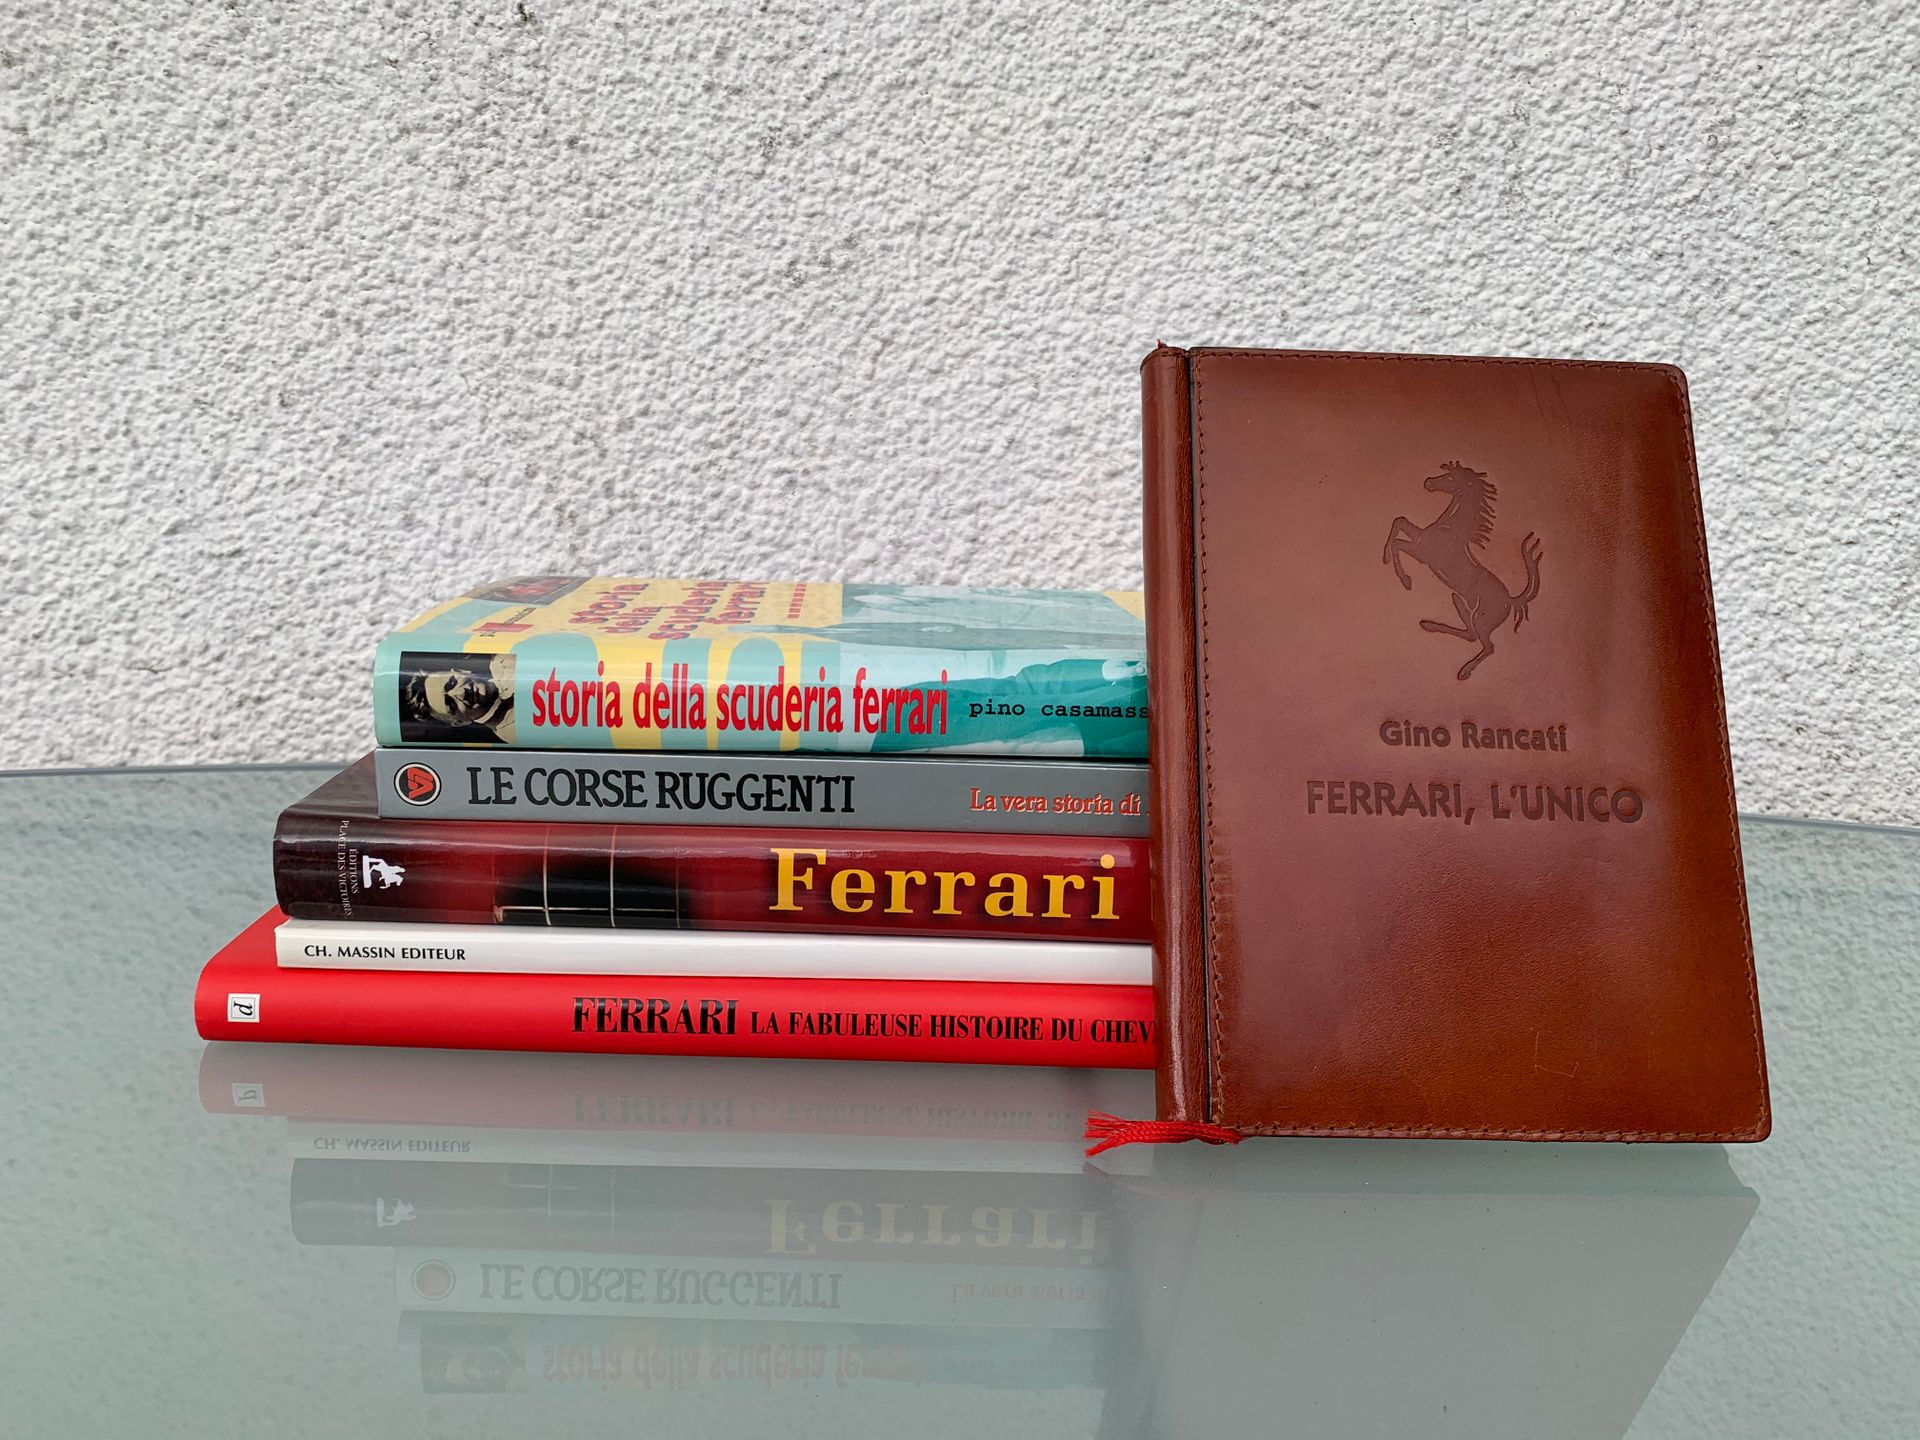 Null Lote de libros : 
Serge Bellu : Los Fabulosos Ferraris 
Ferrari: la máquina&hellip;